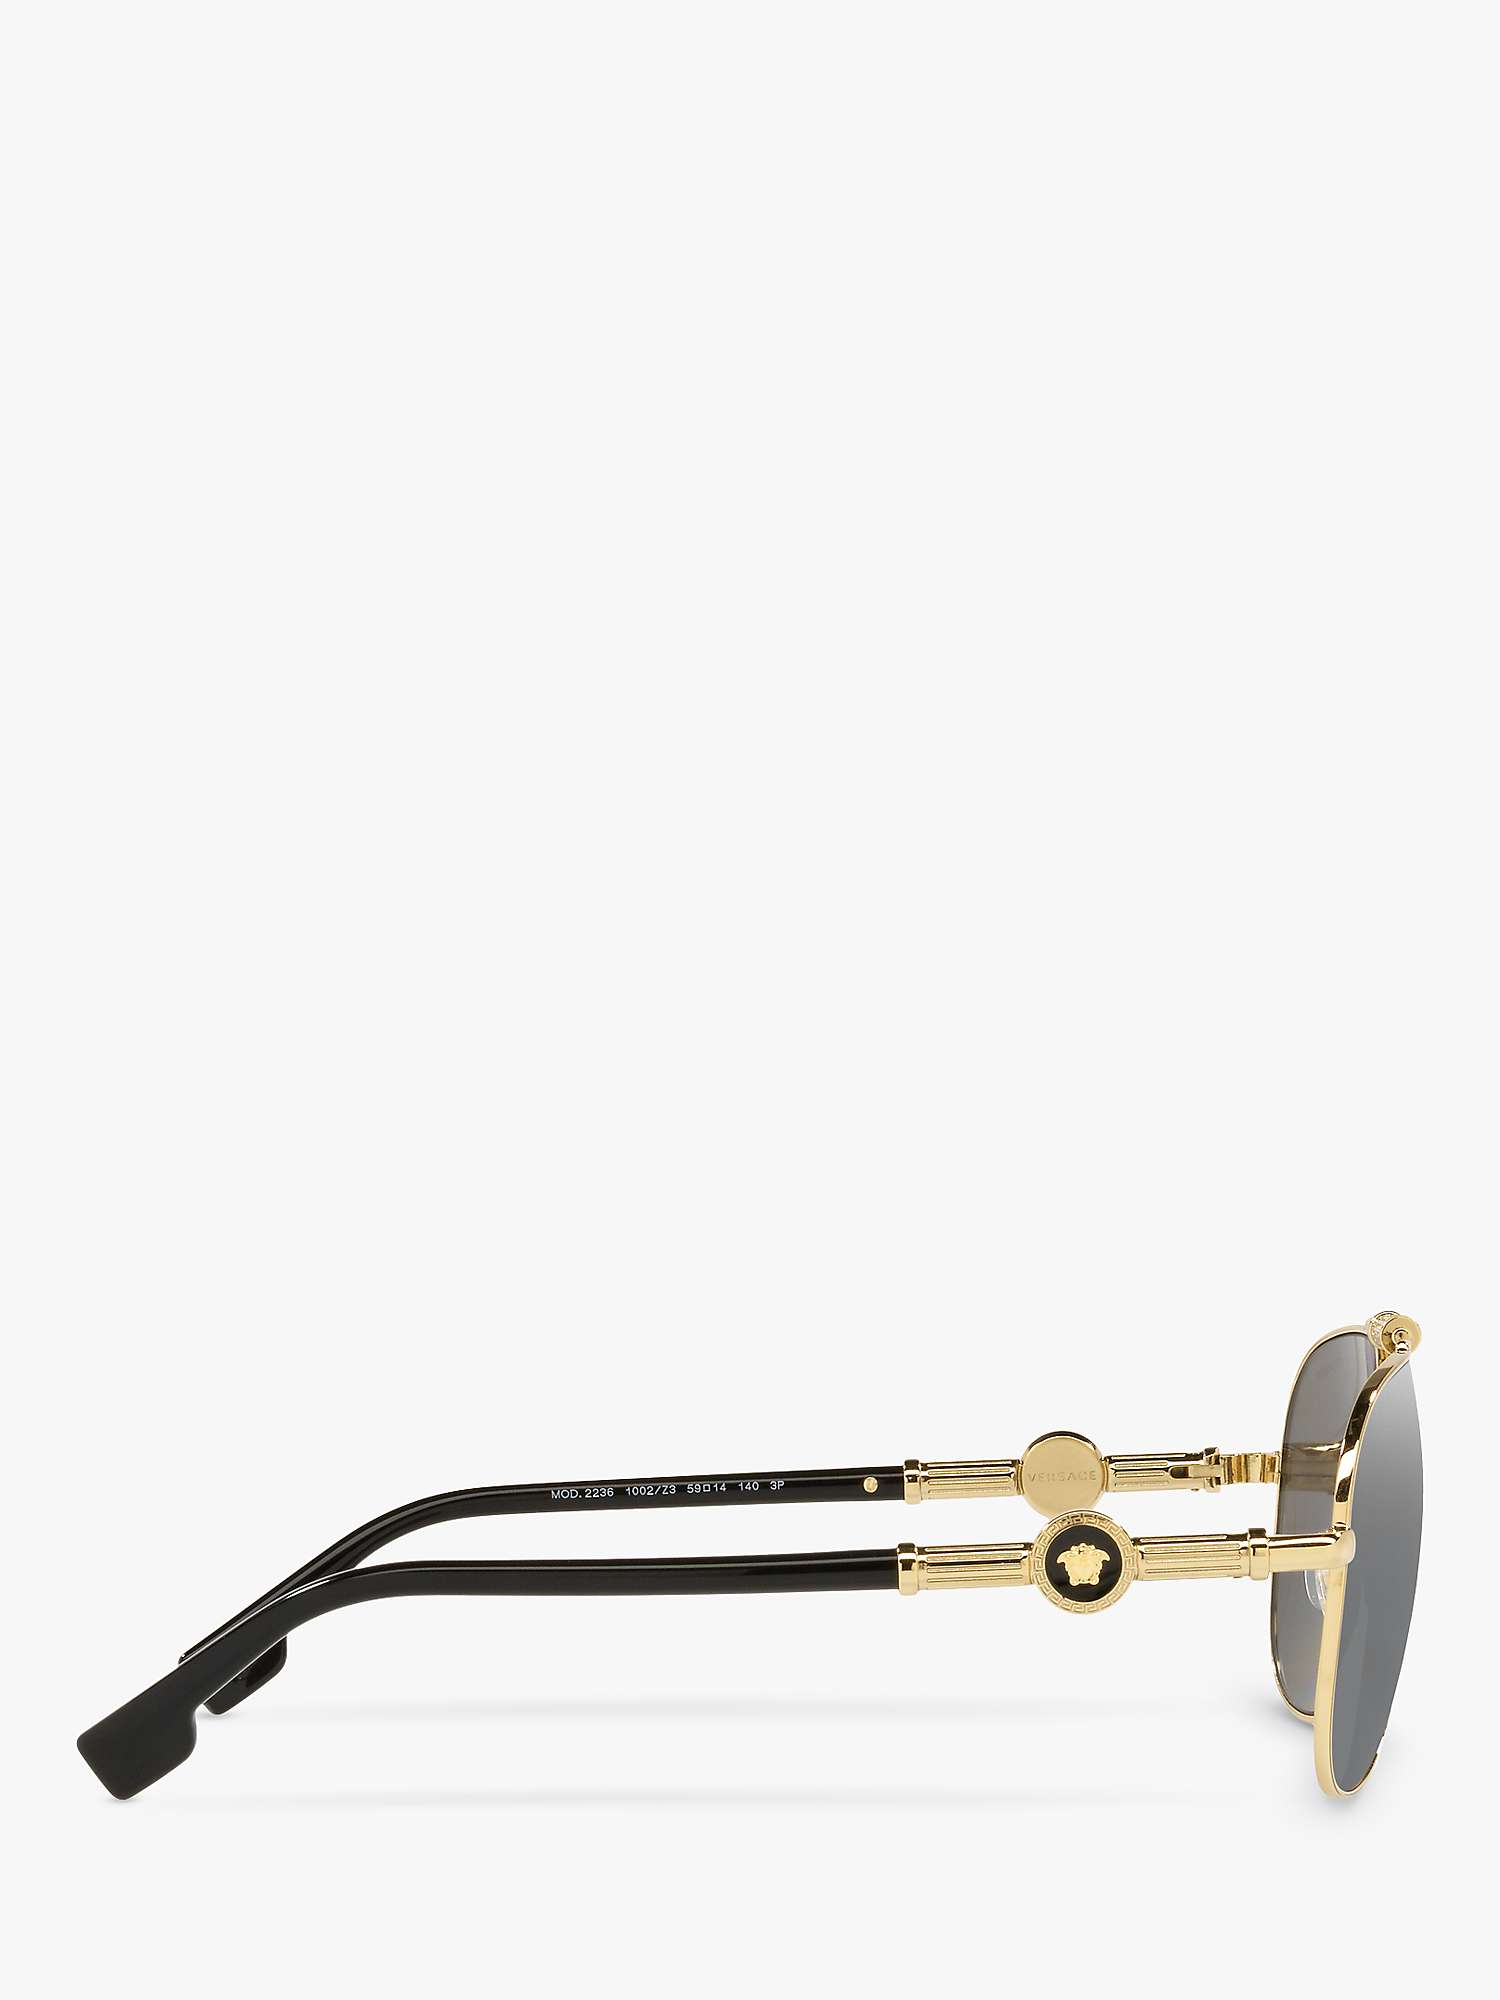 Buy Versace VE2236 Unisex Polarised Pilot Sunglasses, Gold/Grey Online at johnlewis.com